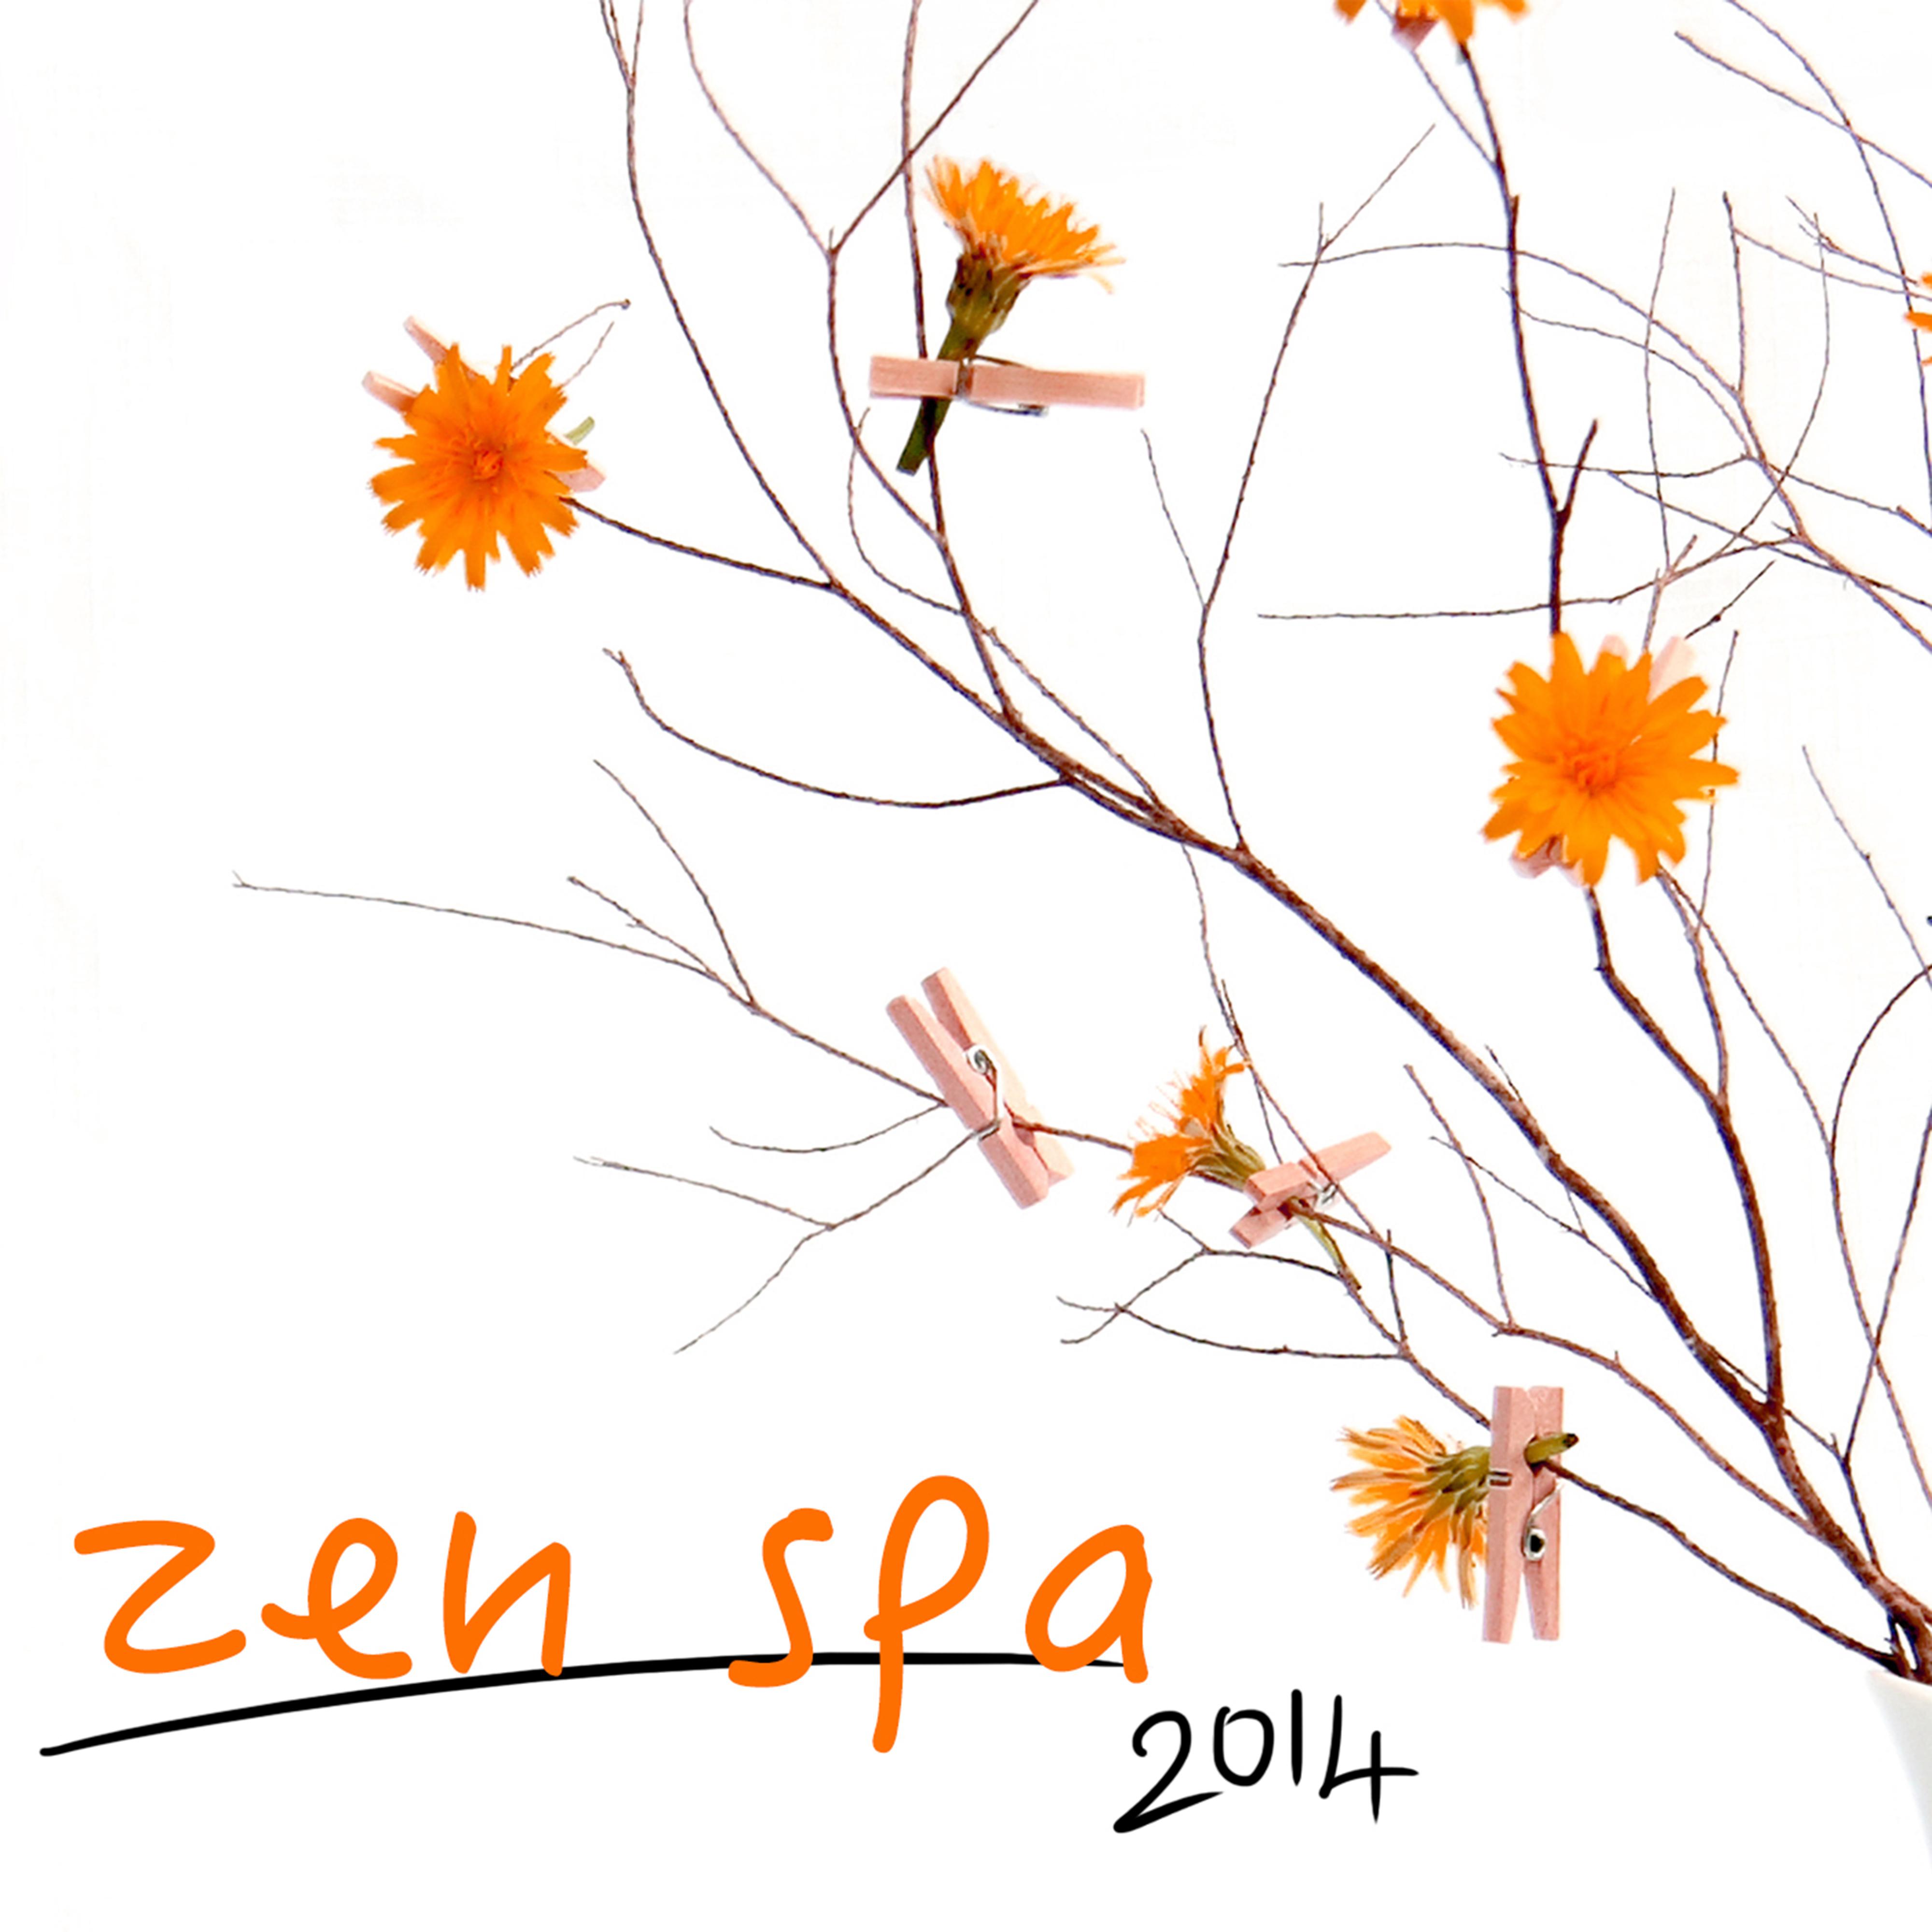 Zen Spa 2014 - Asian Zen Spa Music 4 Relaxation, Meditation, Massage, Yoga, Oriental Meditation Music, Sound Therapy, Restful Sleep & Spa Relaxation